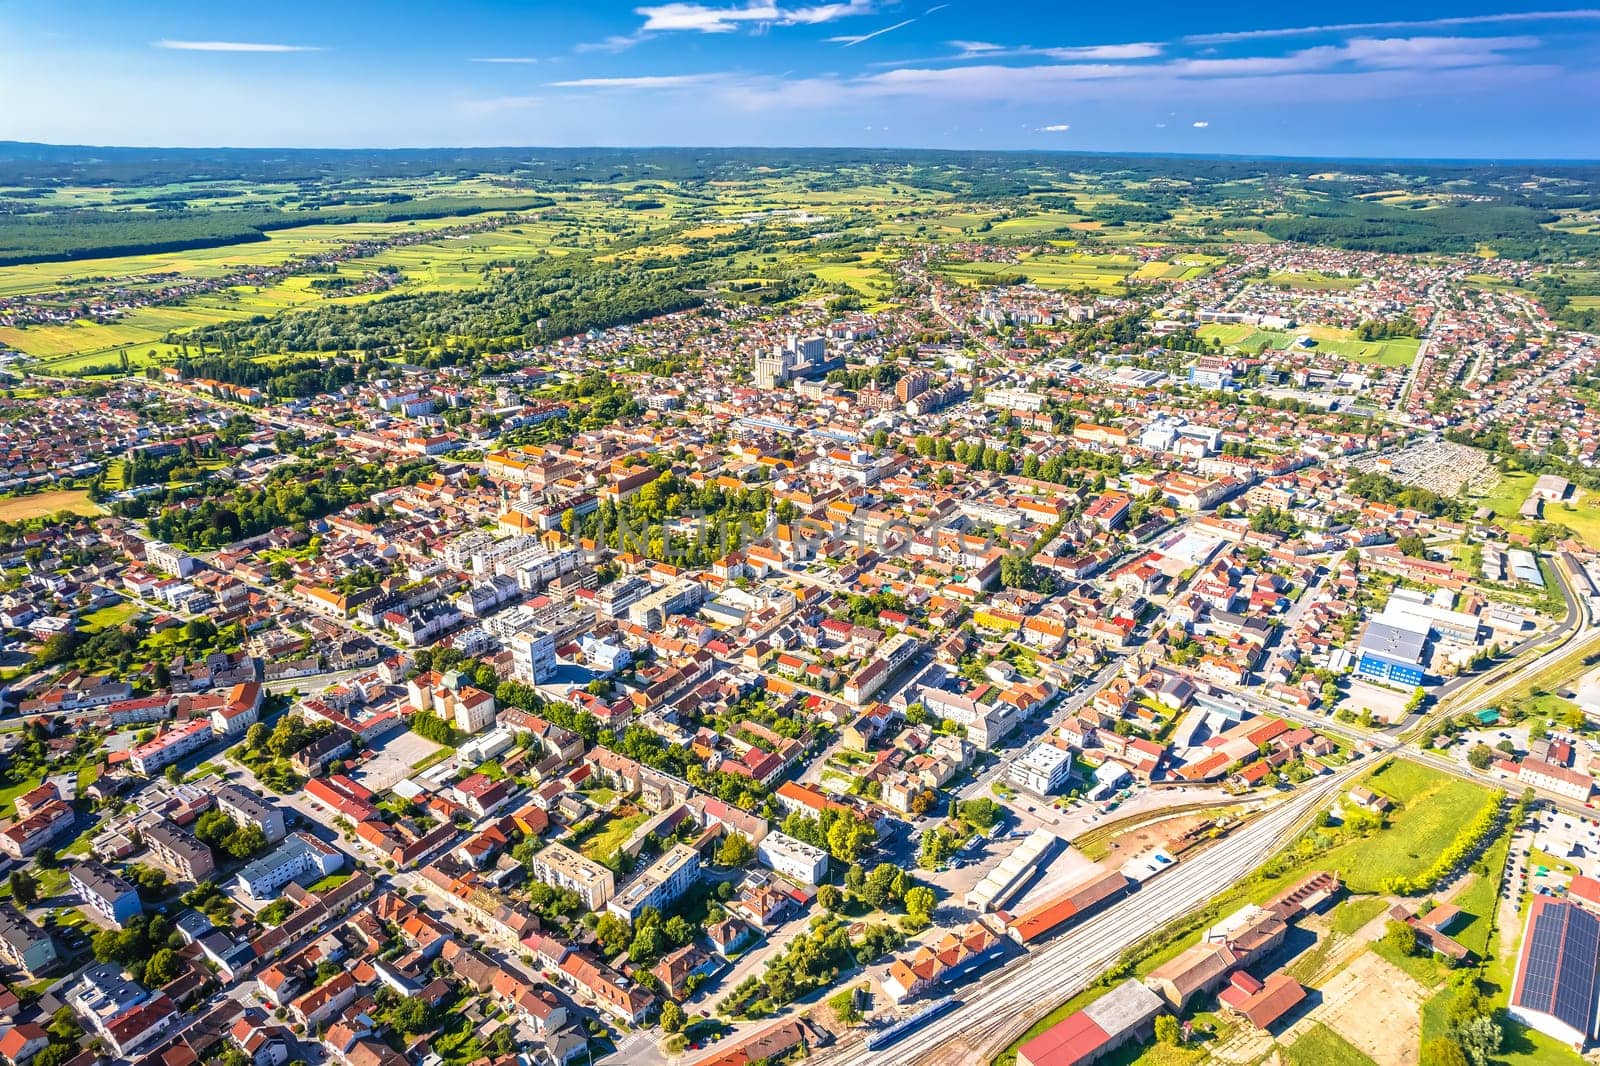 Town of Bjelovar aerial view, Bilogora region of Northern Croatia